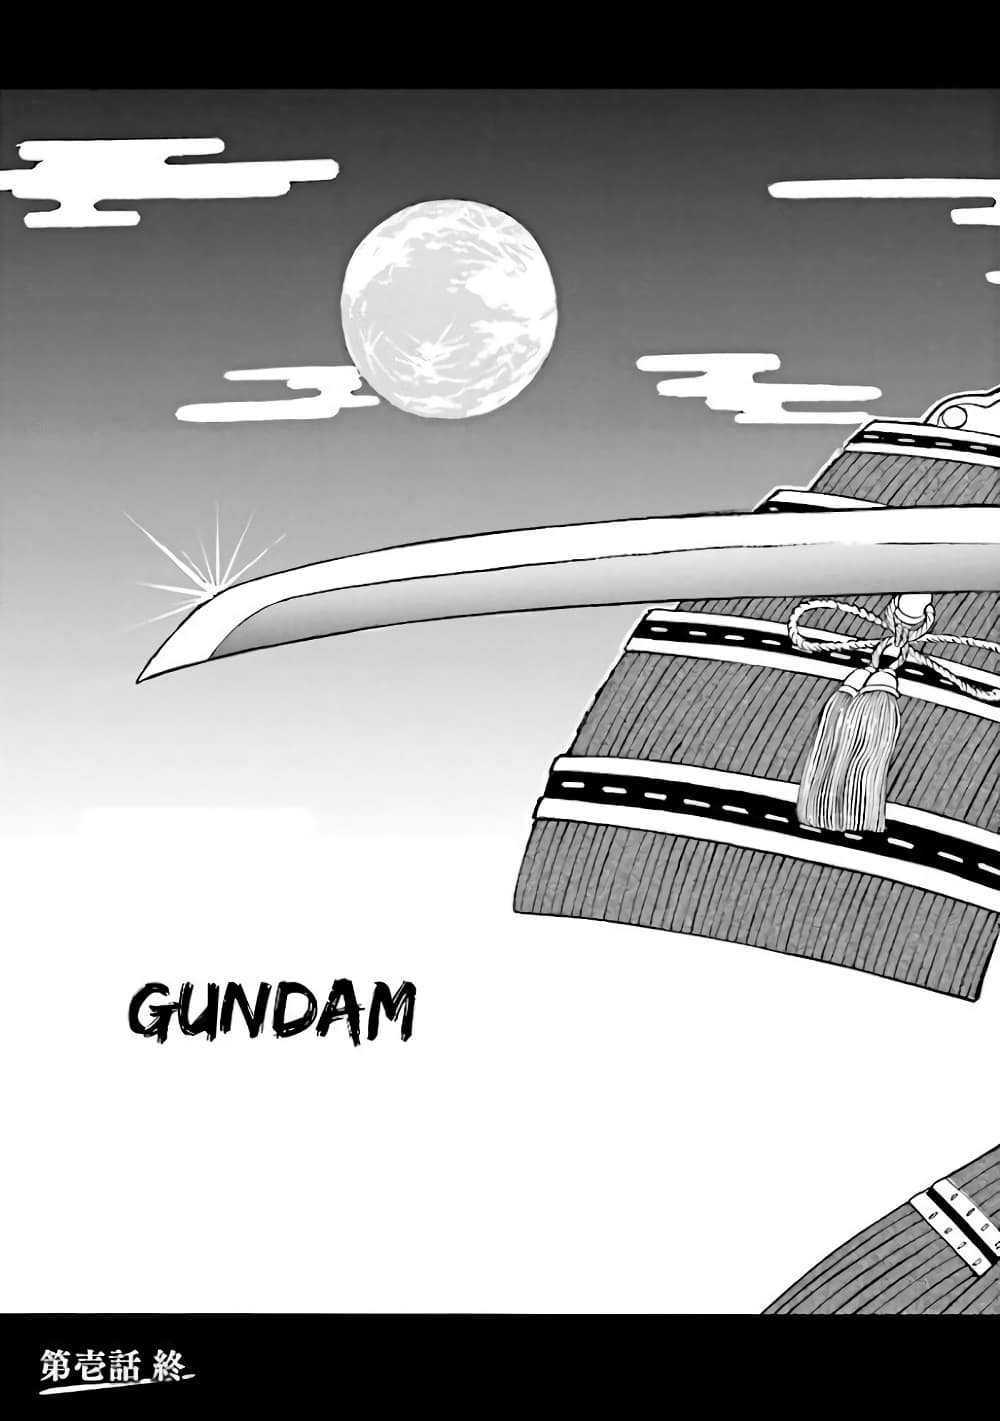 Mobile War History Gundam Burai ตอนที่ 1.2 (32)